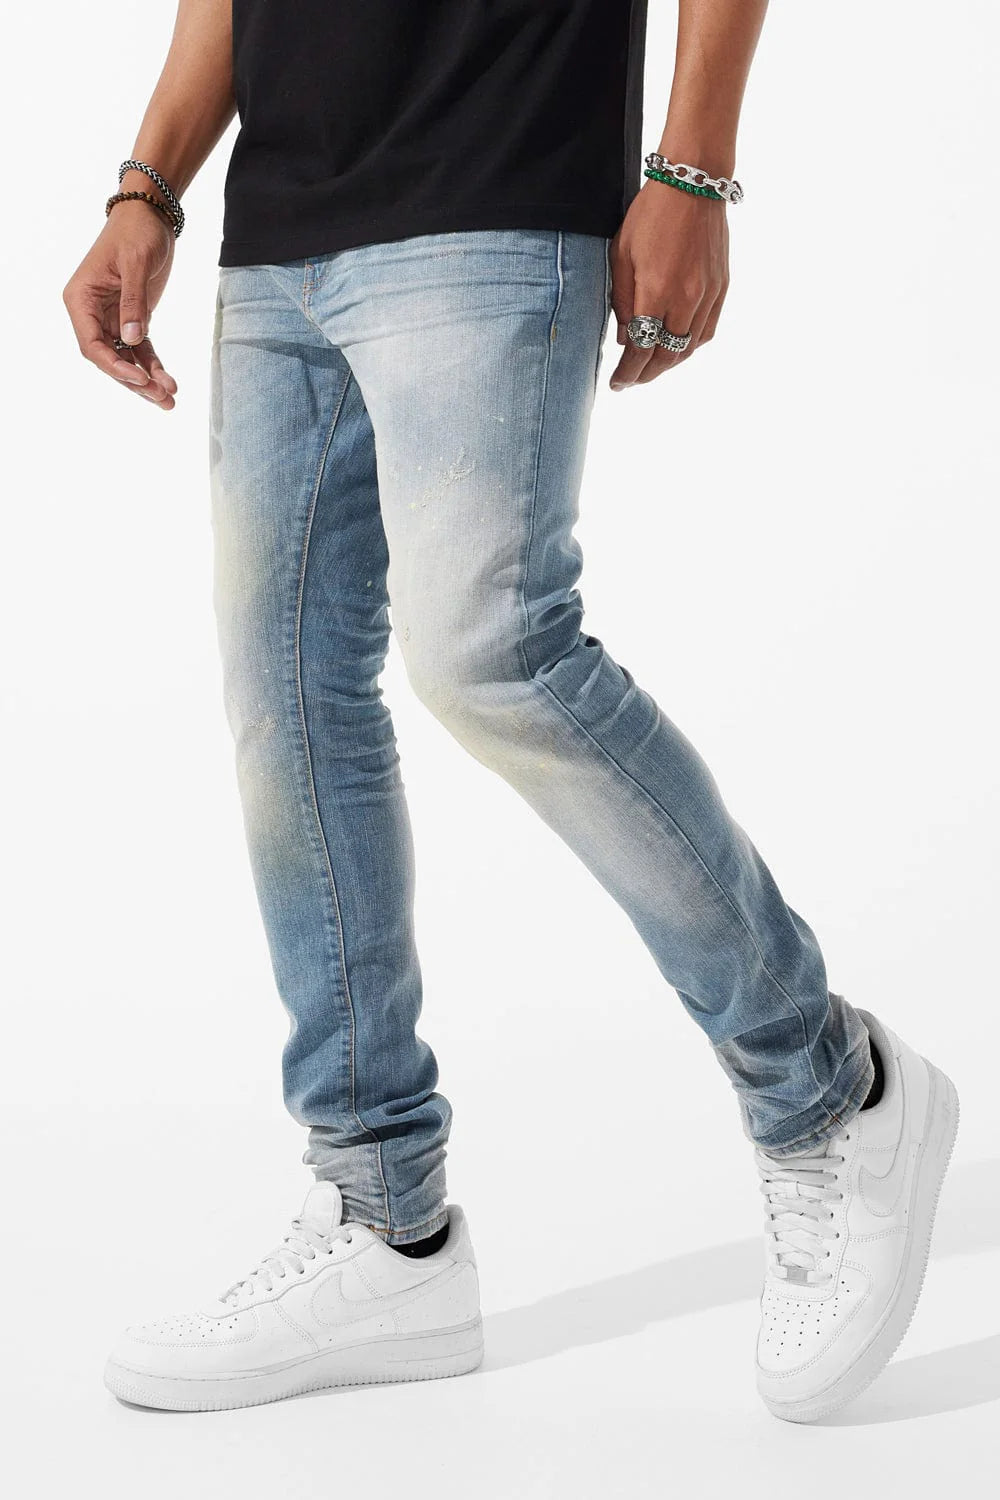 JC GERONIMO slim jeans Blue Lagoon js1189